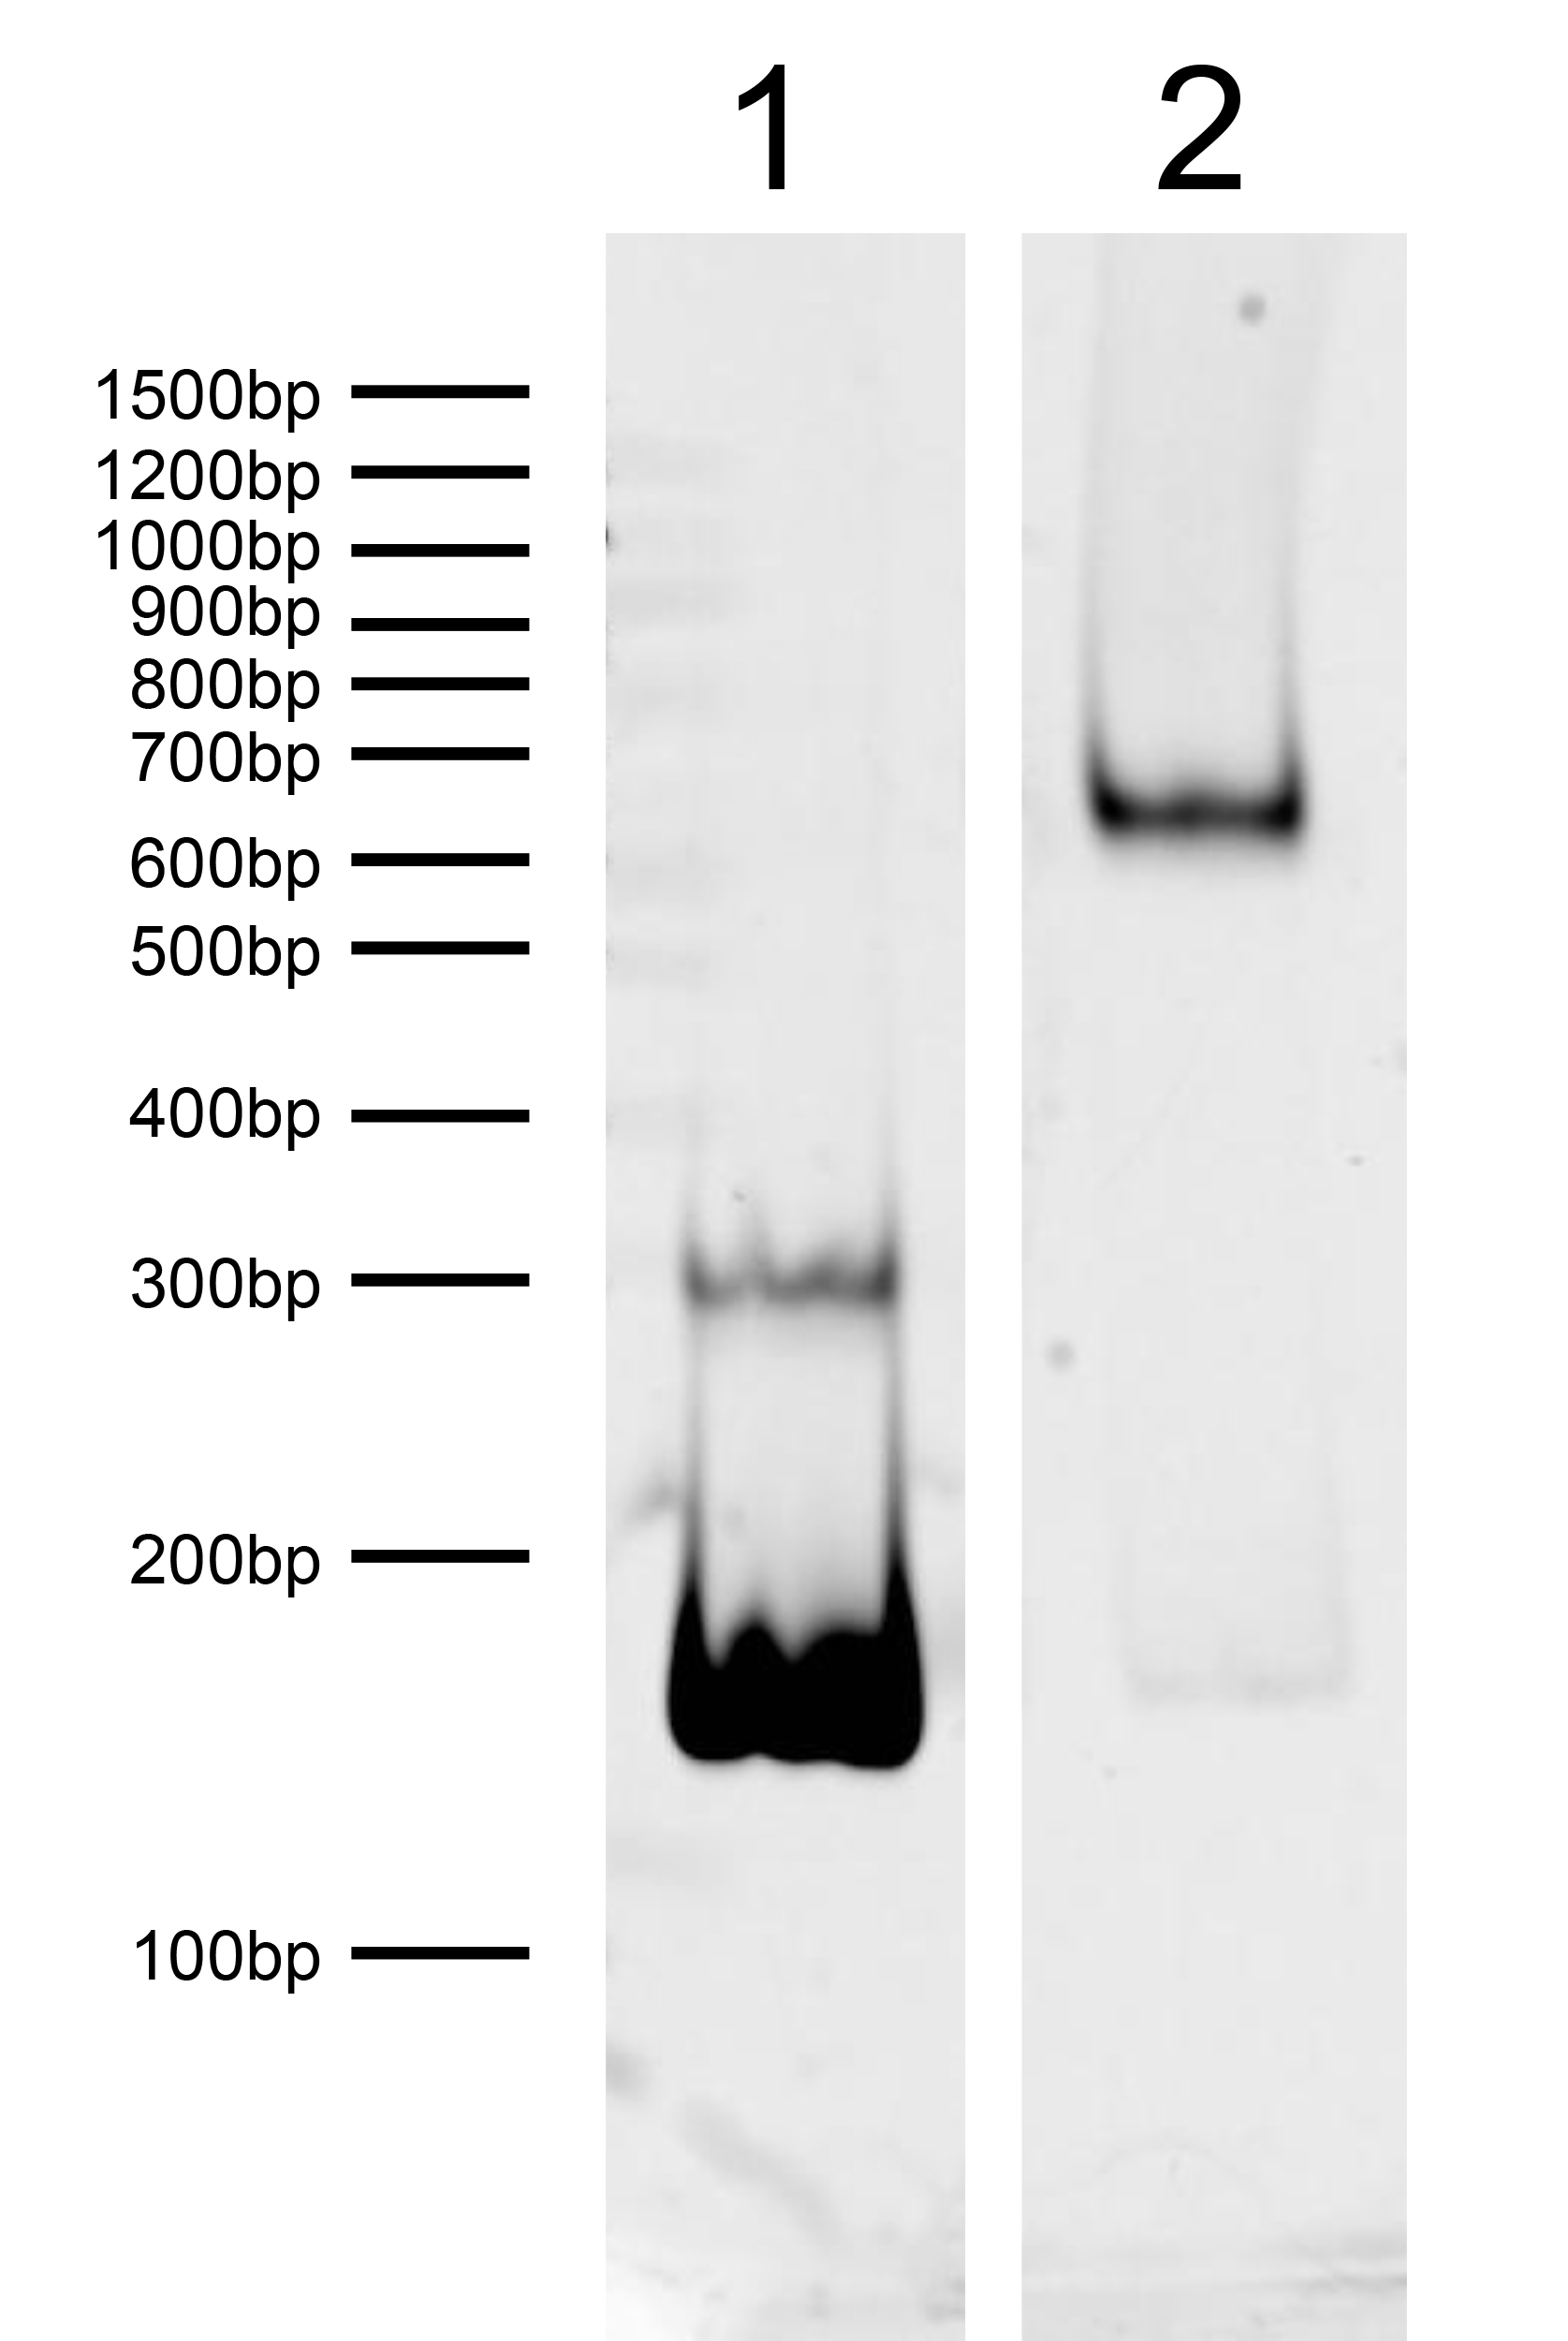 16-0388 DNA Gel Data